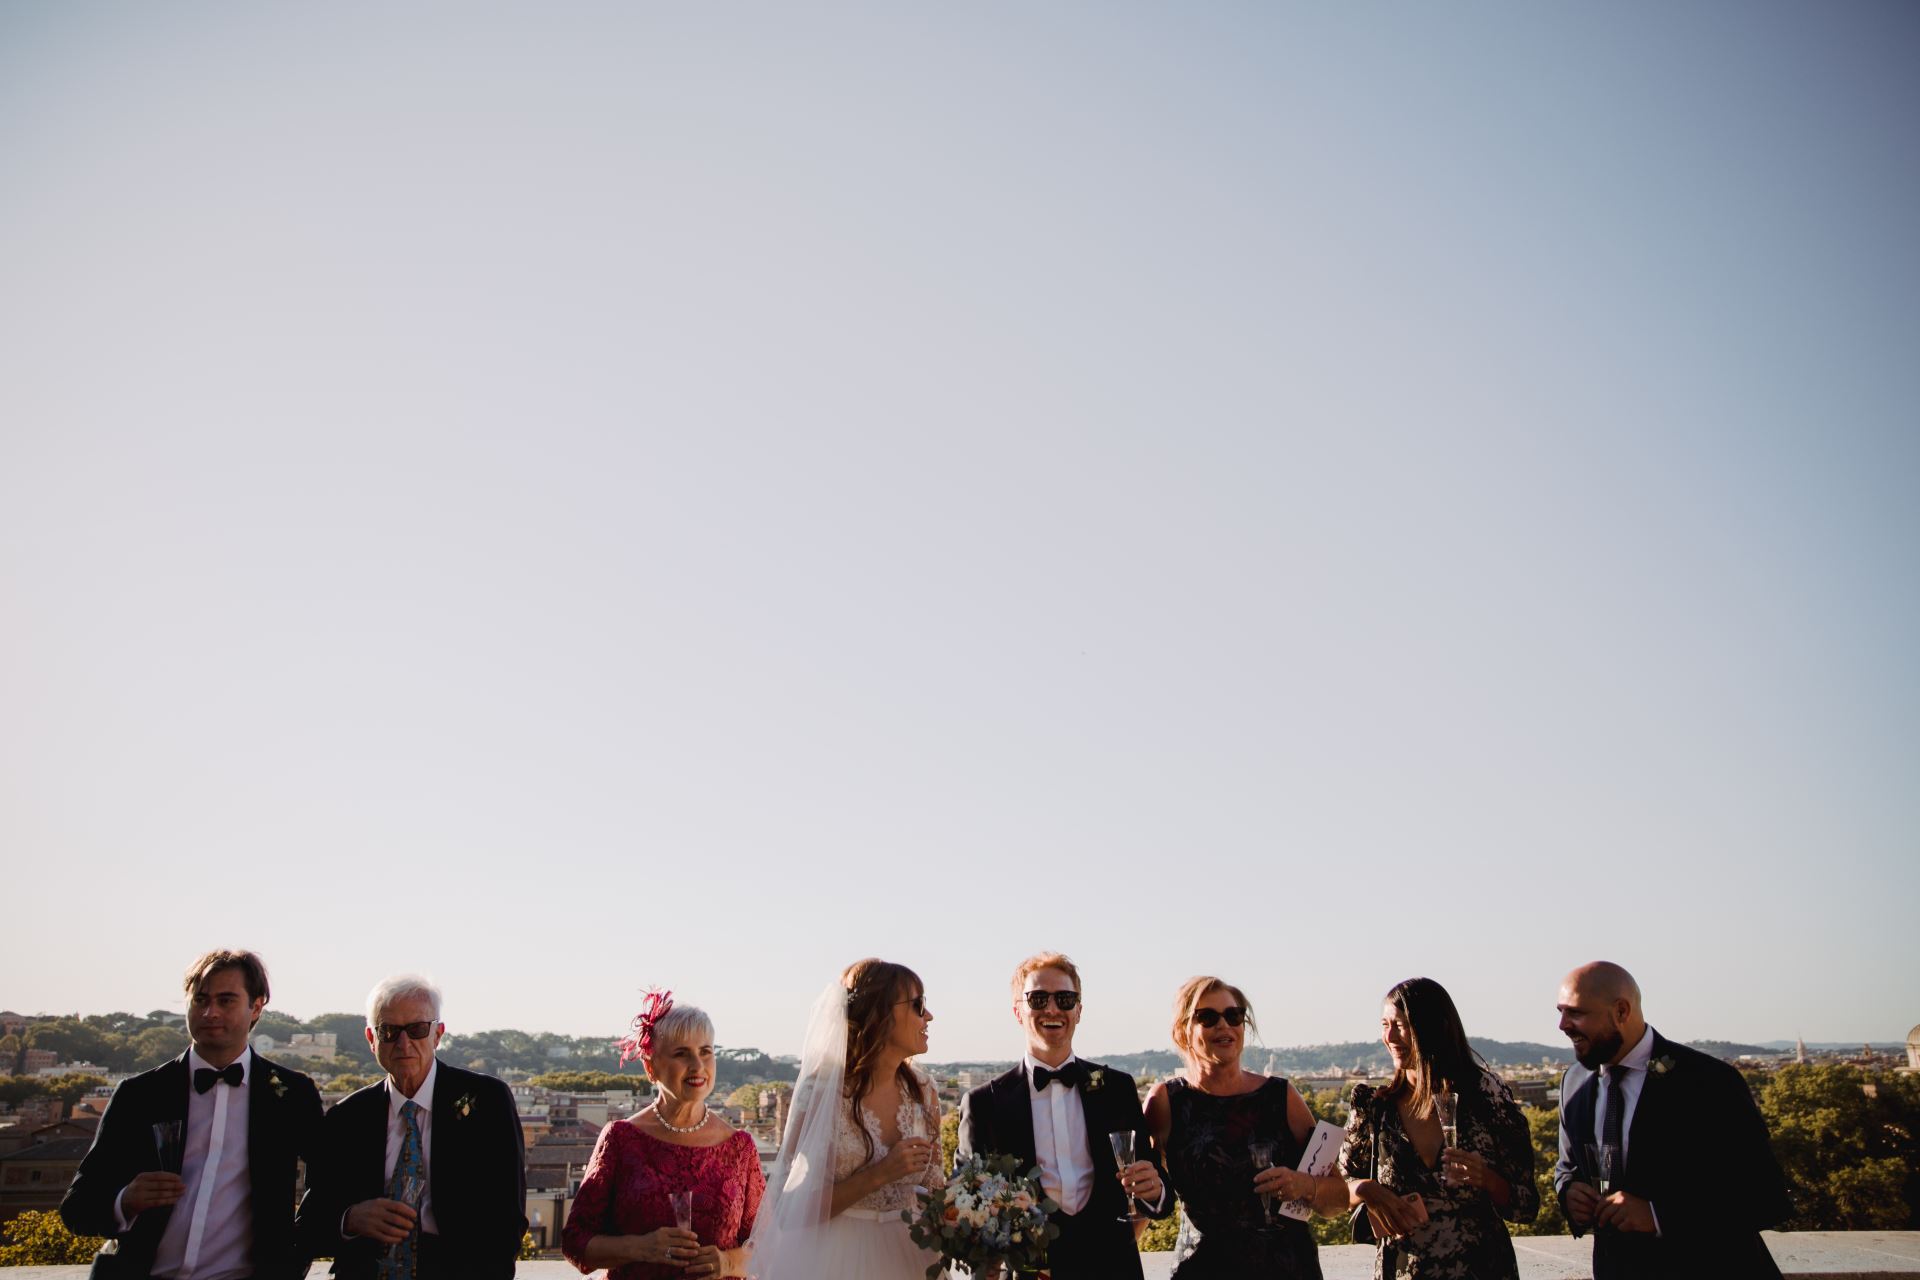 Giorgia&Alessio fotografo matrimonio destination wedding photographer videographer luxury italia como lake amalfi coast apulia rome roma sicily masseria potenti tuscany battesimo cerimonia ceremony bologna